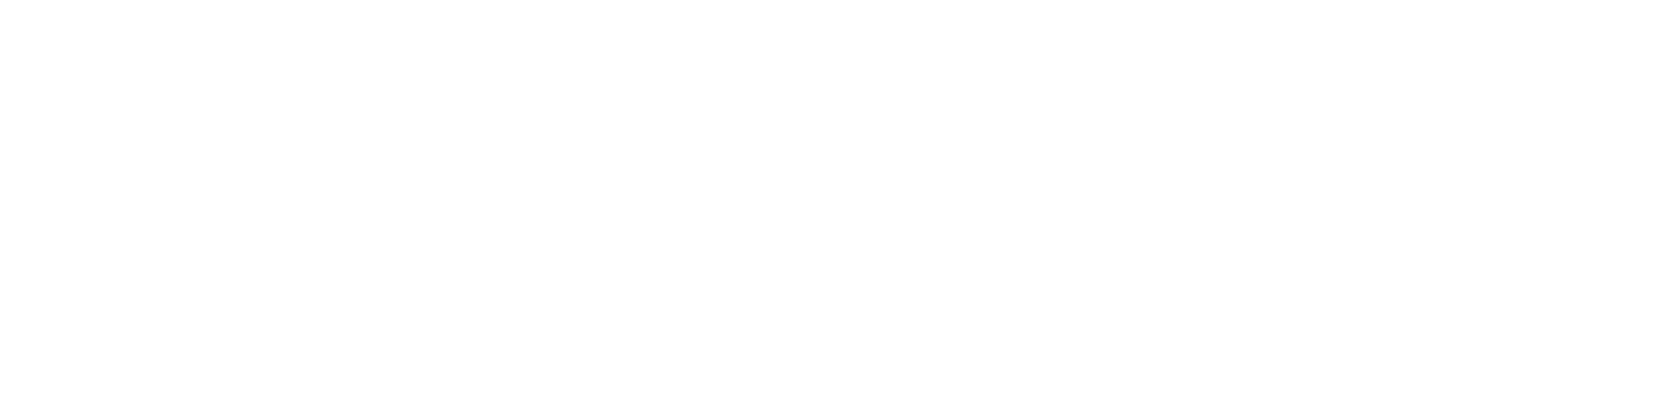 AWS Wickr Logo